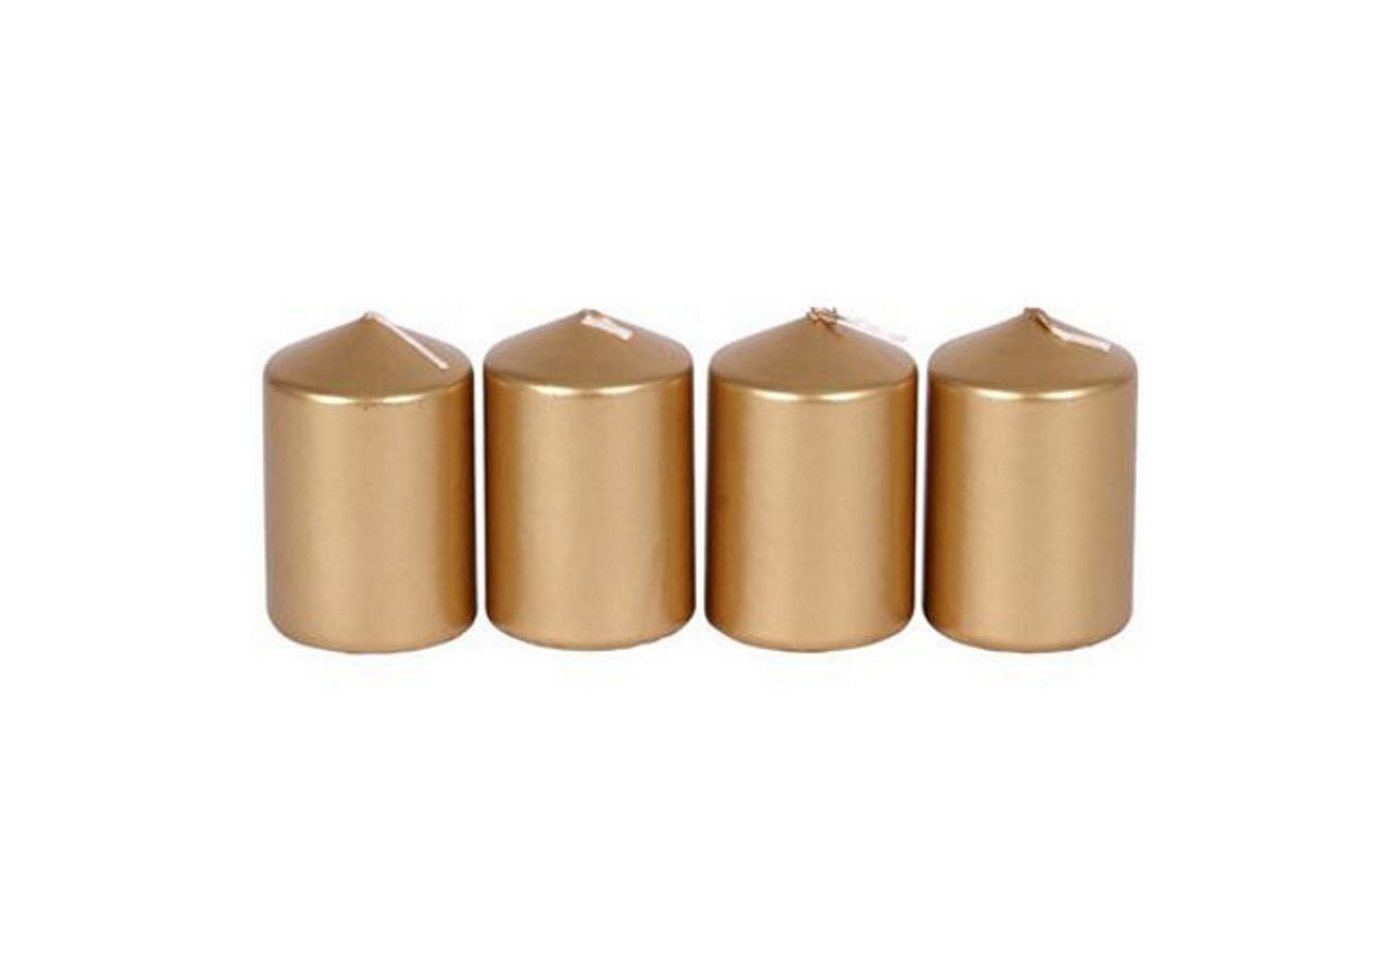 BURI Stumpenkerze Metallic-Stumpenkerzen gold 4er-Set Adventskerzen Weihnachtskerzen Tis von BURI